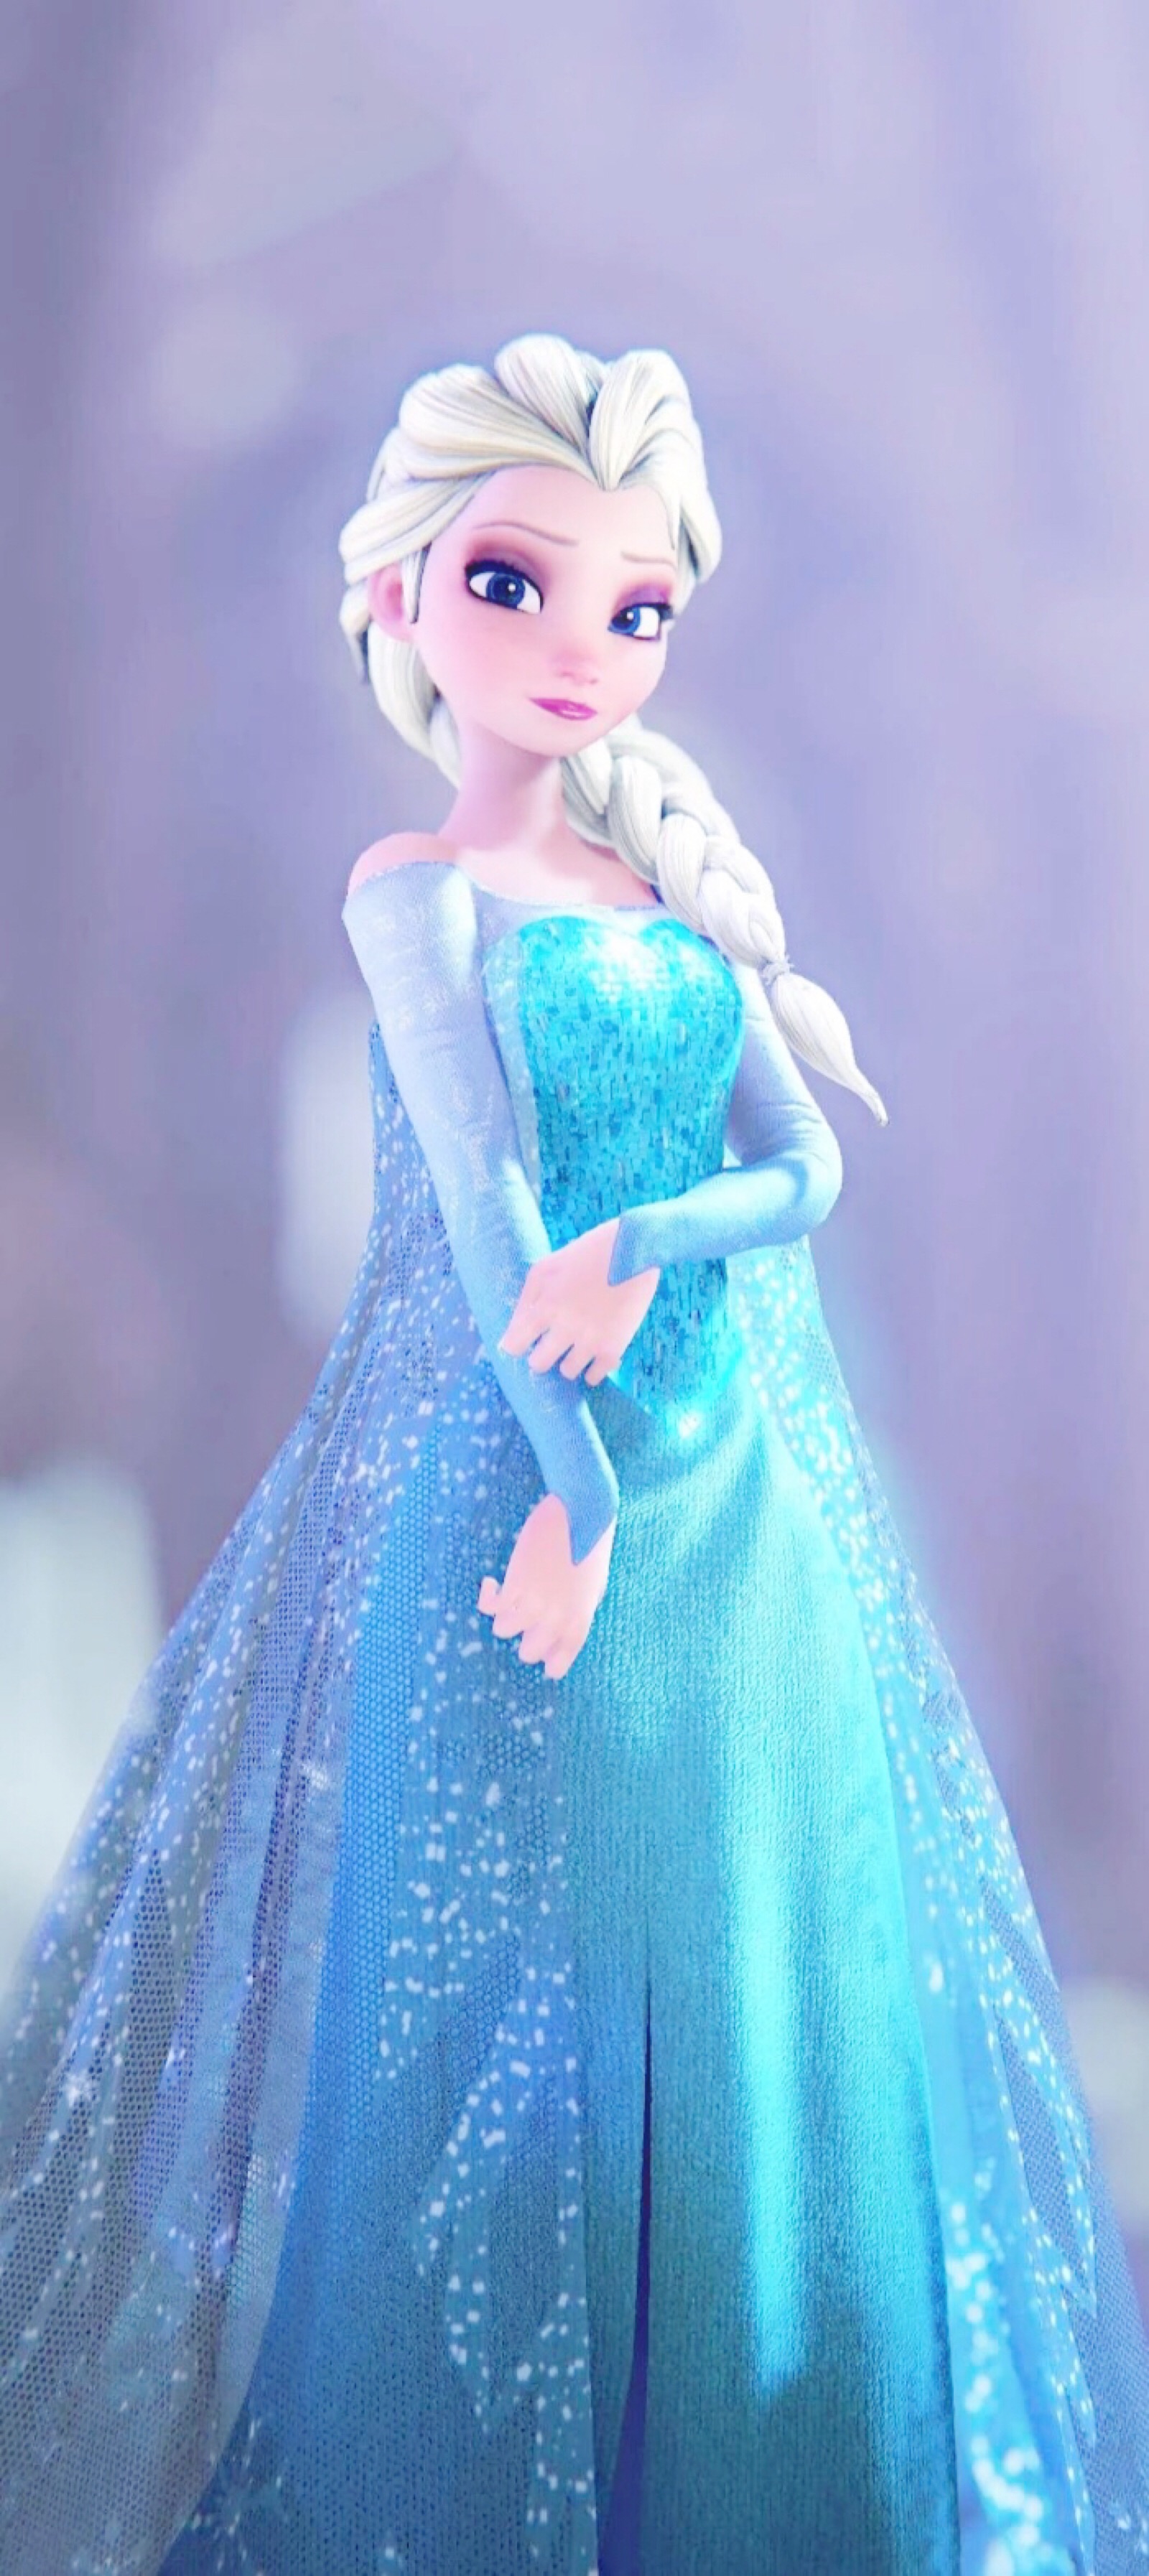 Elsa -Frozen - Elsa Queen - Frozen Photo (38208174) - Fanpop